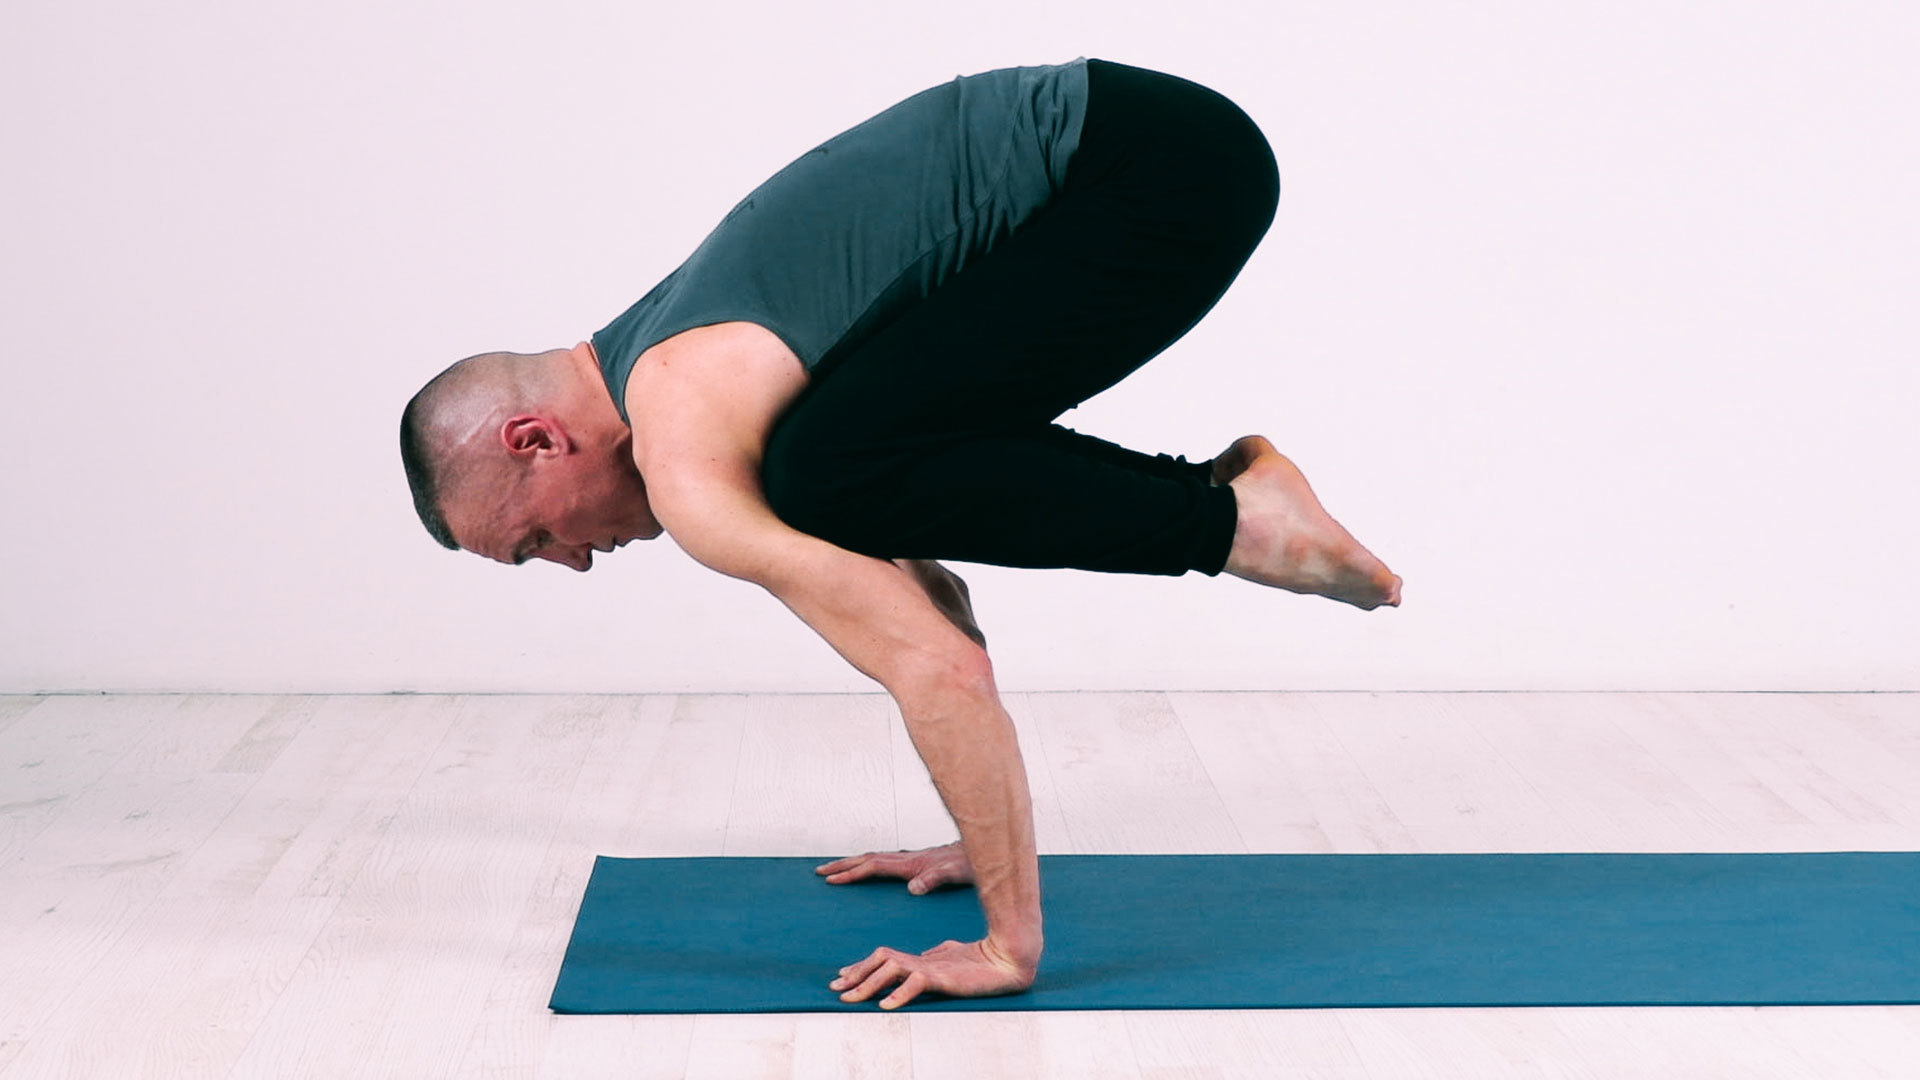 Watch Yoga videos on The Wellness Corner